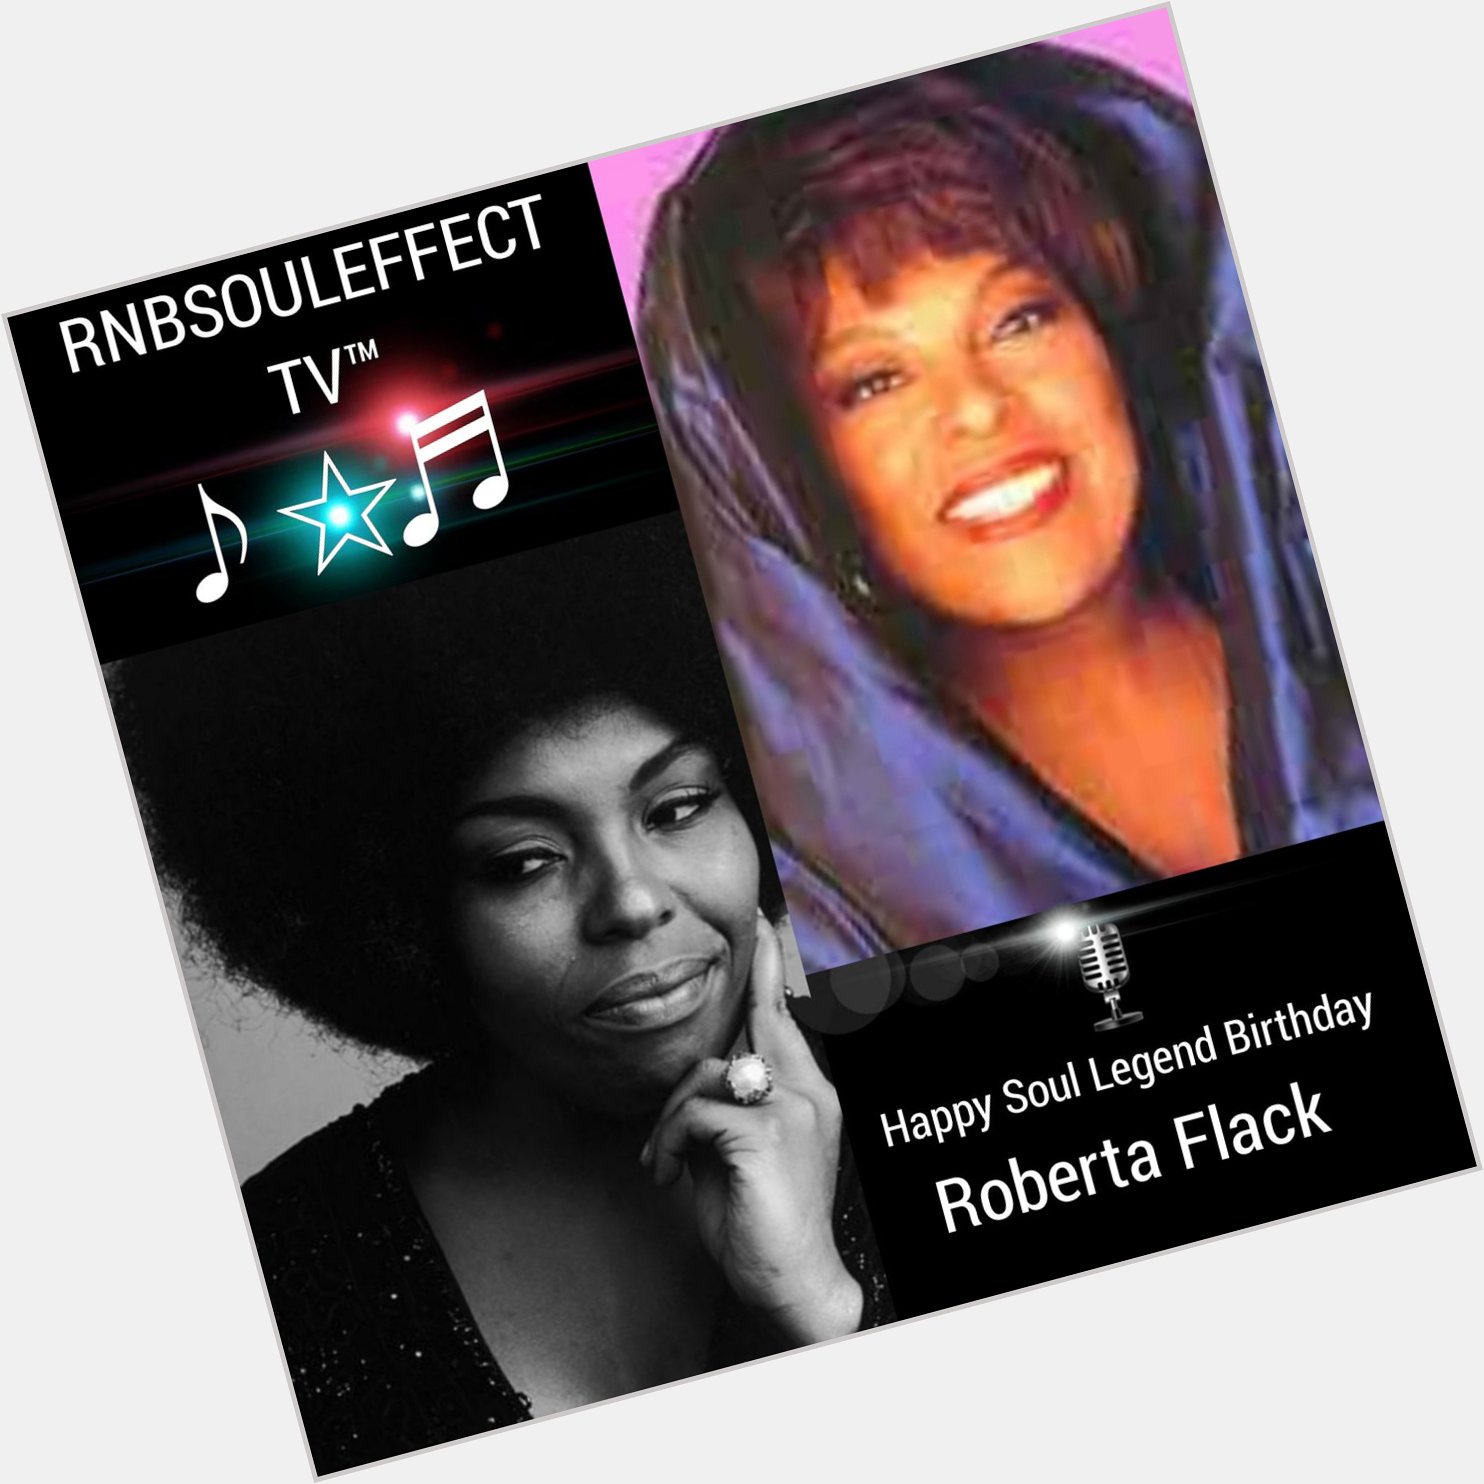 Happy Soul Legend Birthday Roberta Flack 